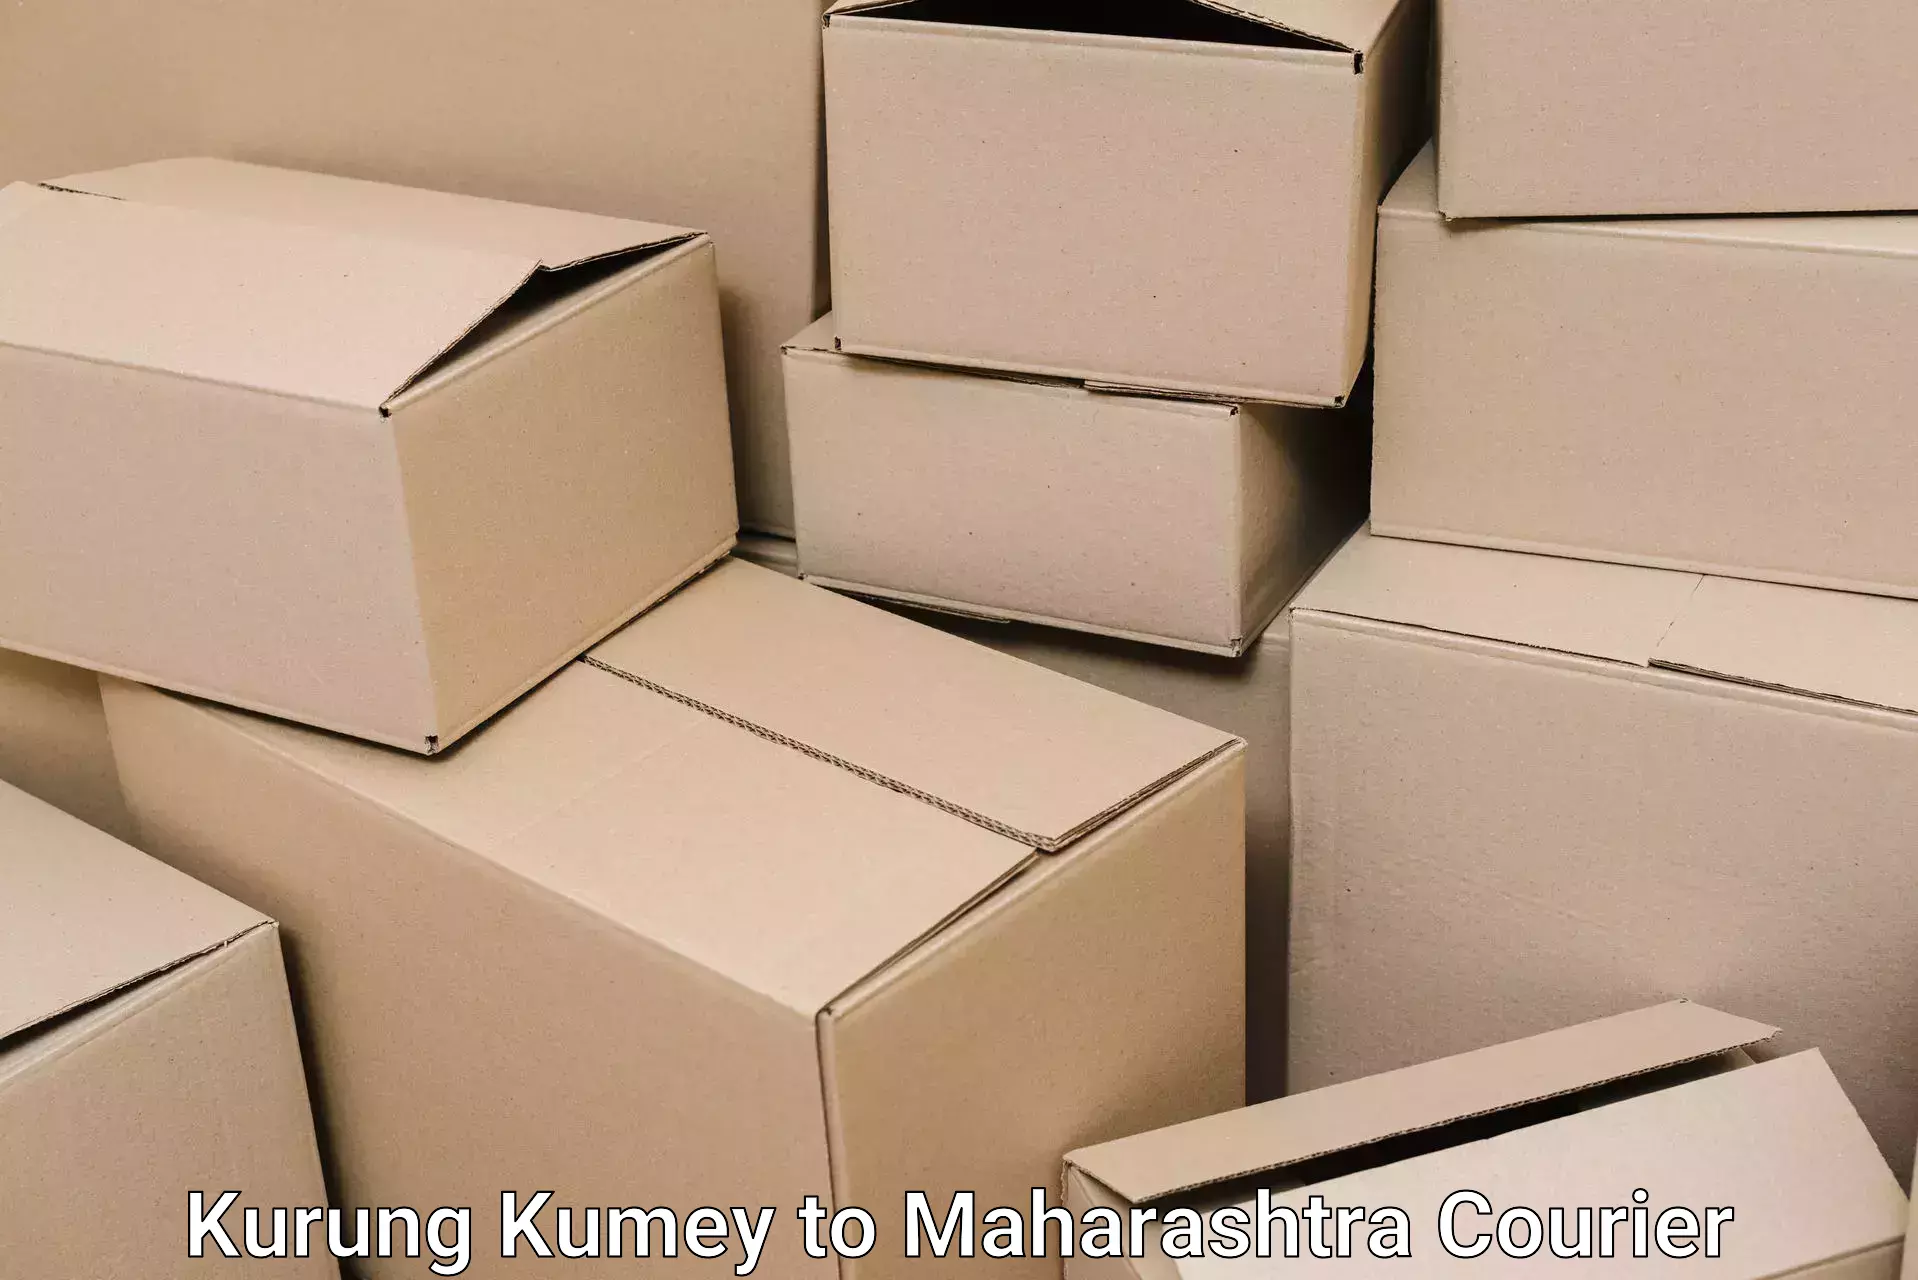 Specialized moving company in Kurung Kumey to Wardha